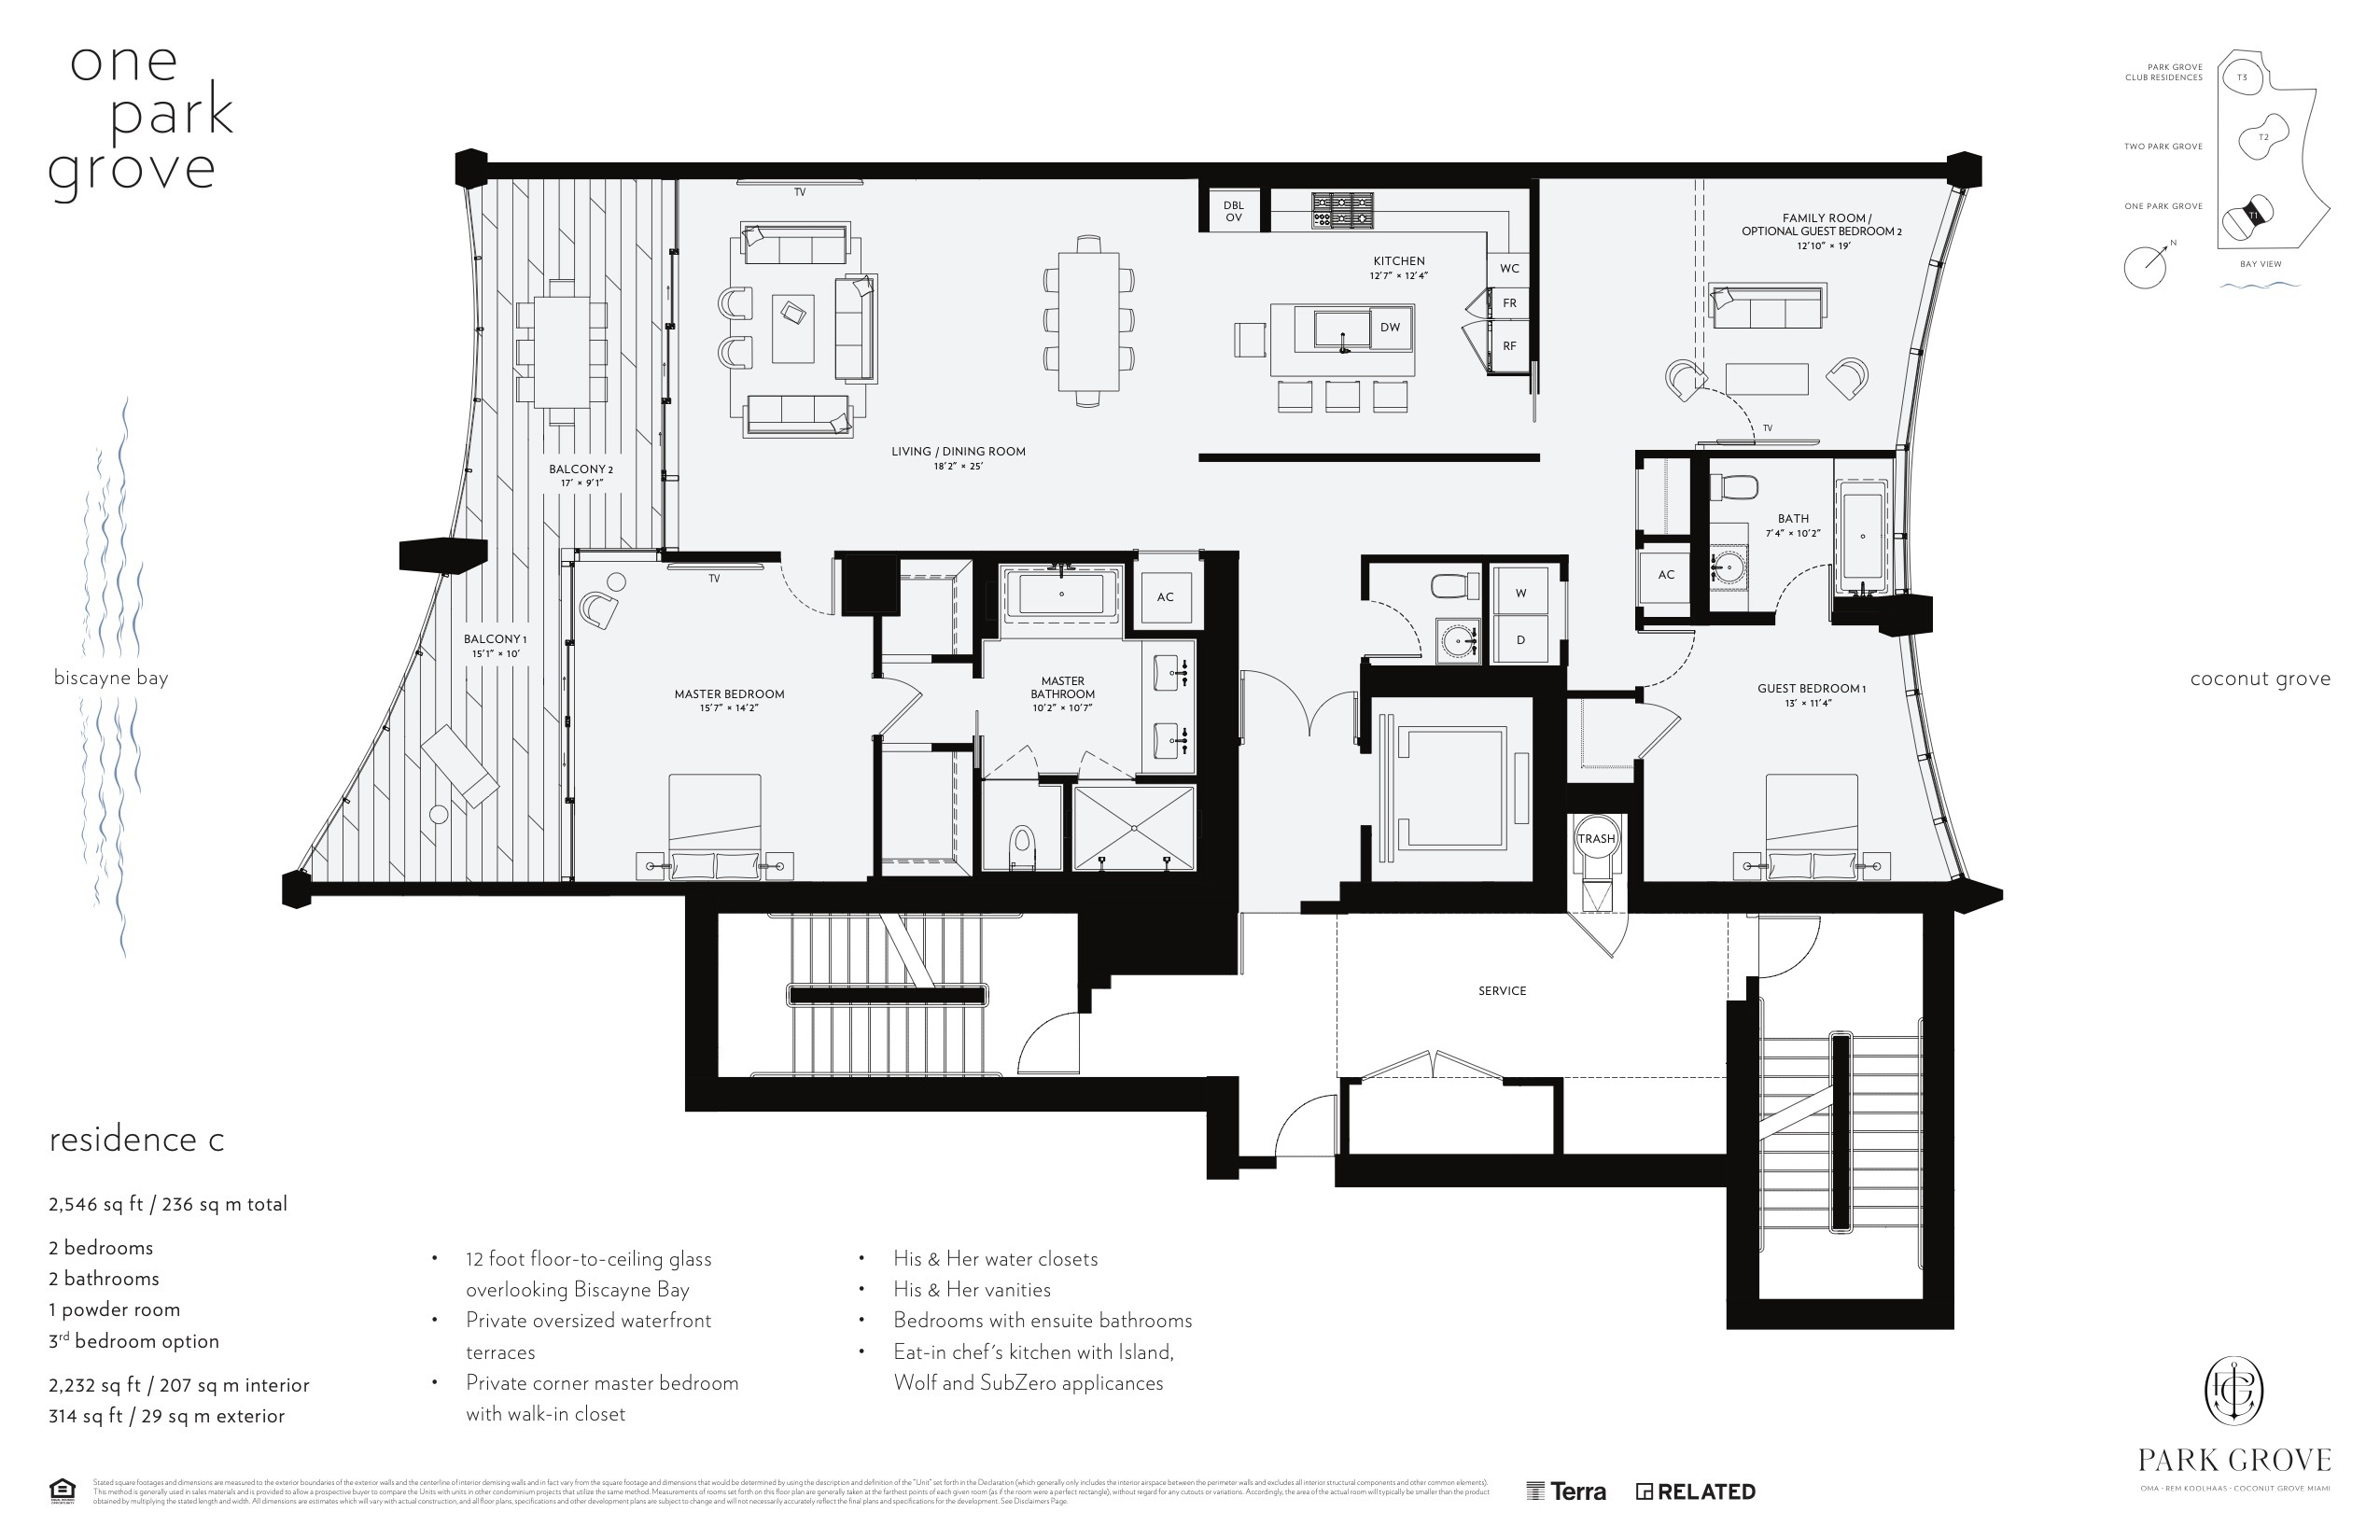 Floor Plan for Park Grove Floorplans, One Park Grove Residence C